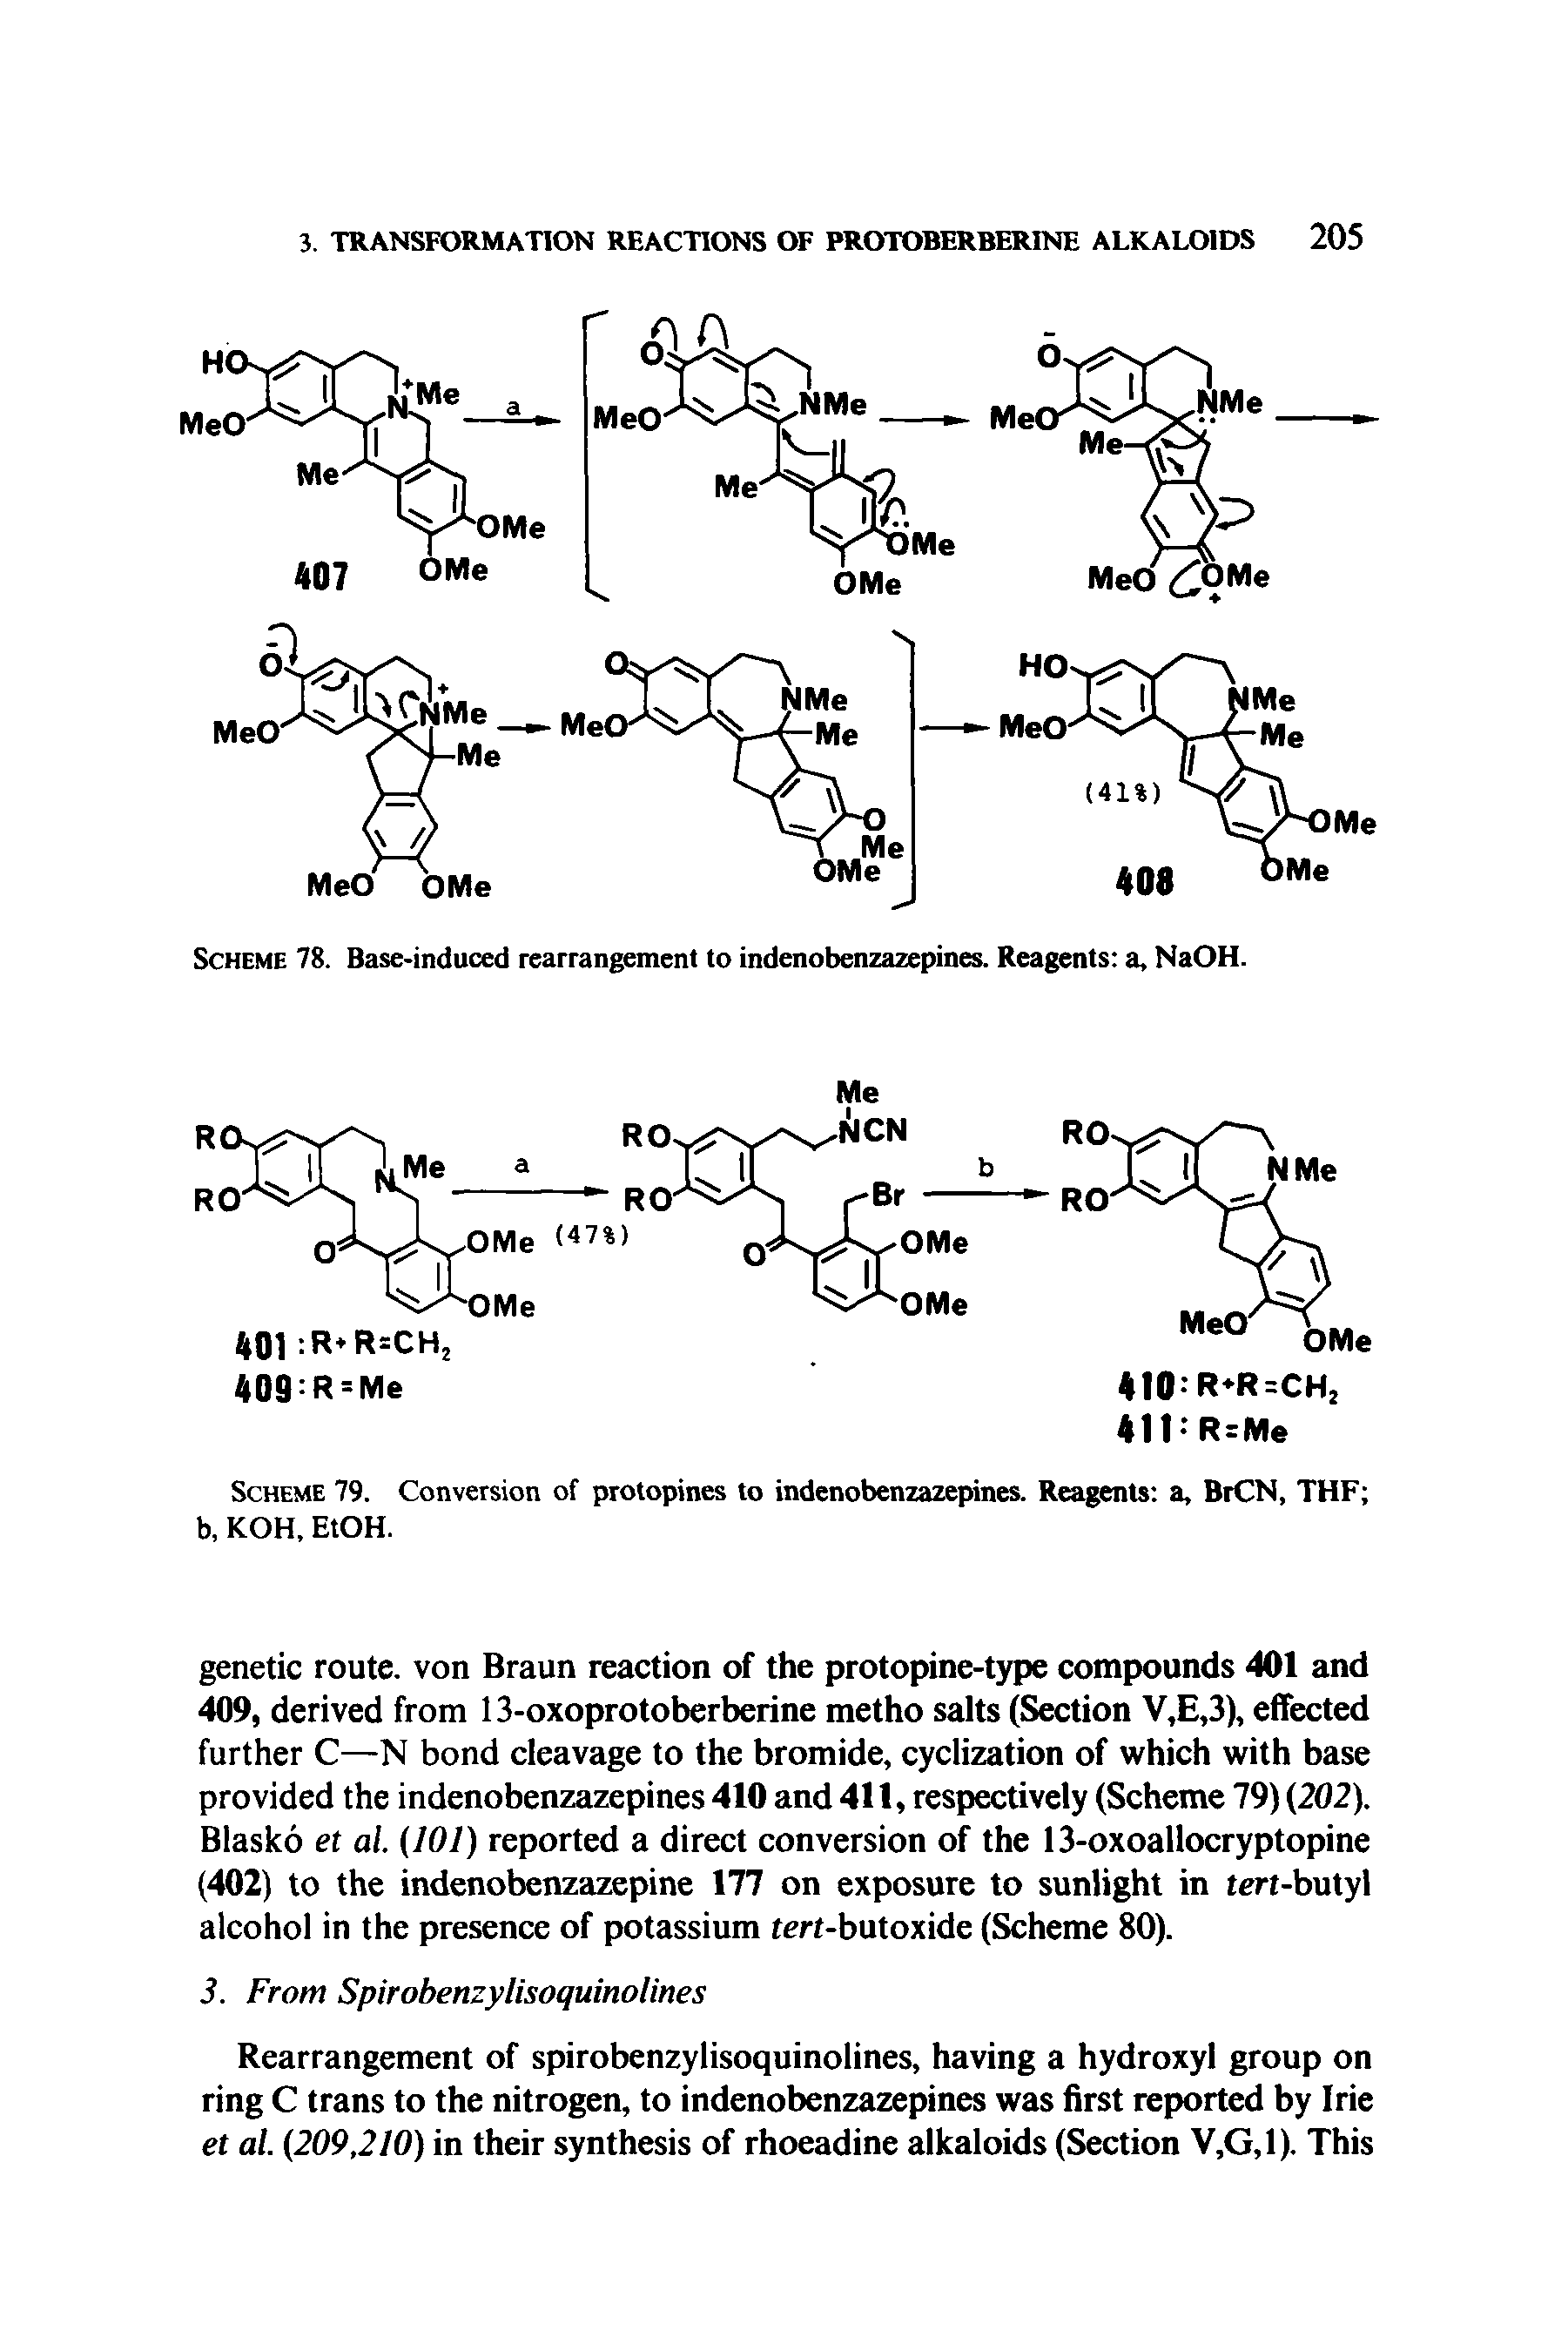 Scheme 79. Conversion of protopines to indenobenzazepines. Reagents a, BrCN, THF b, KOH, EtOH.